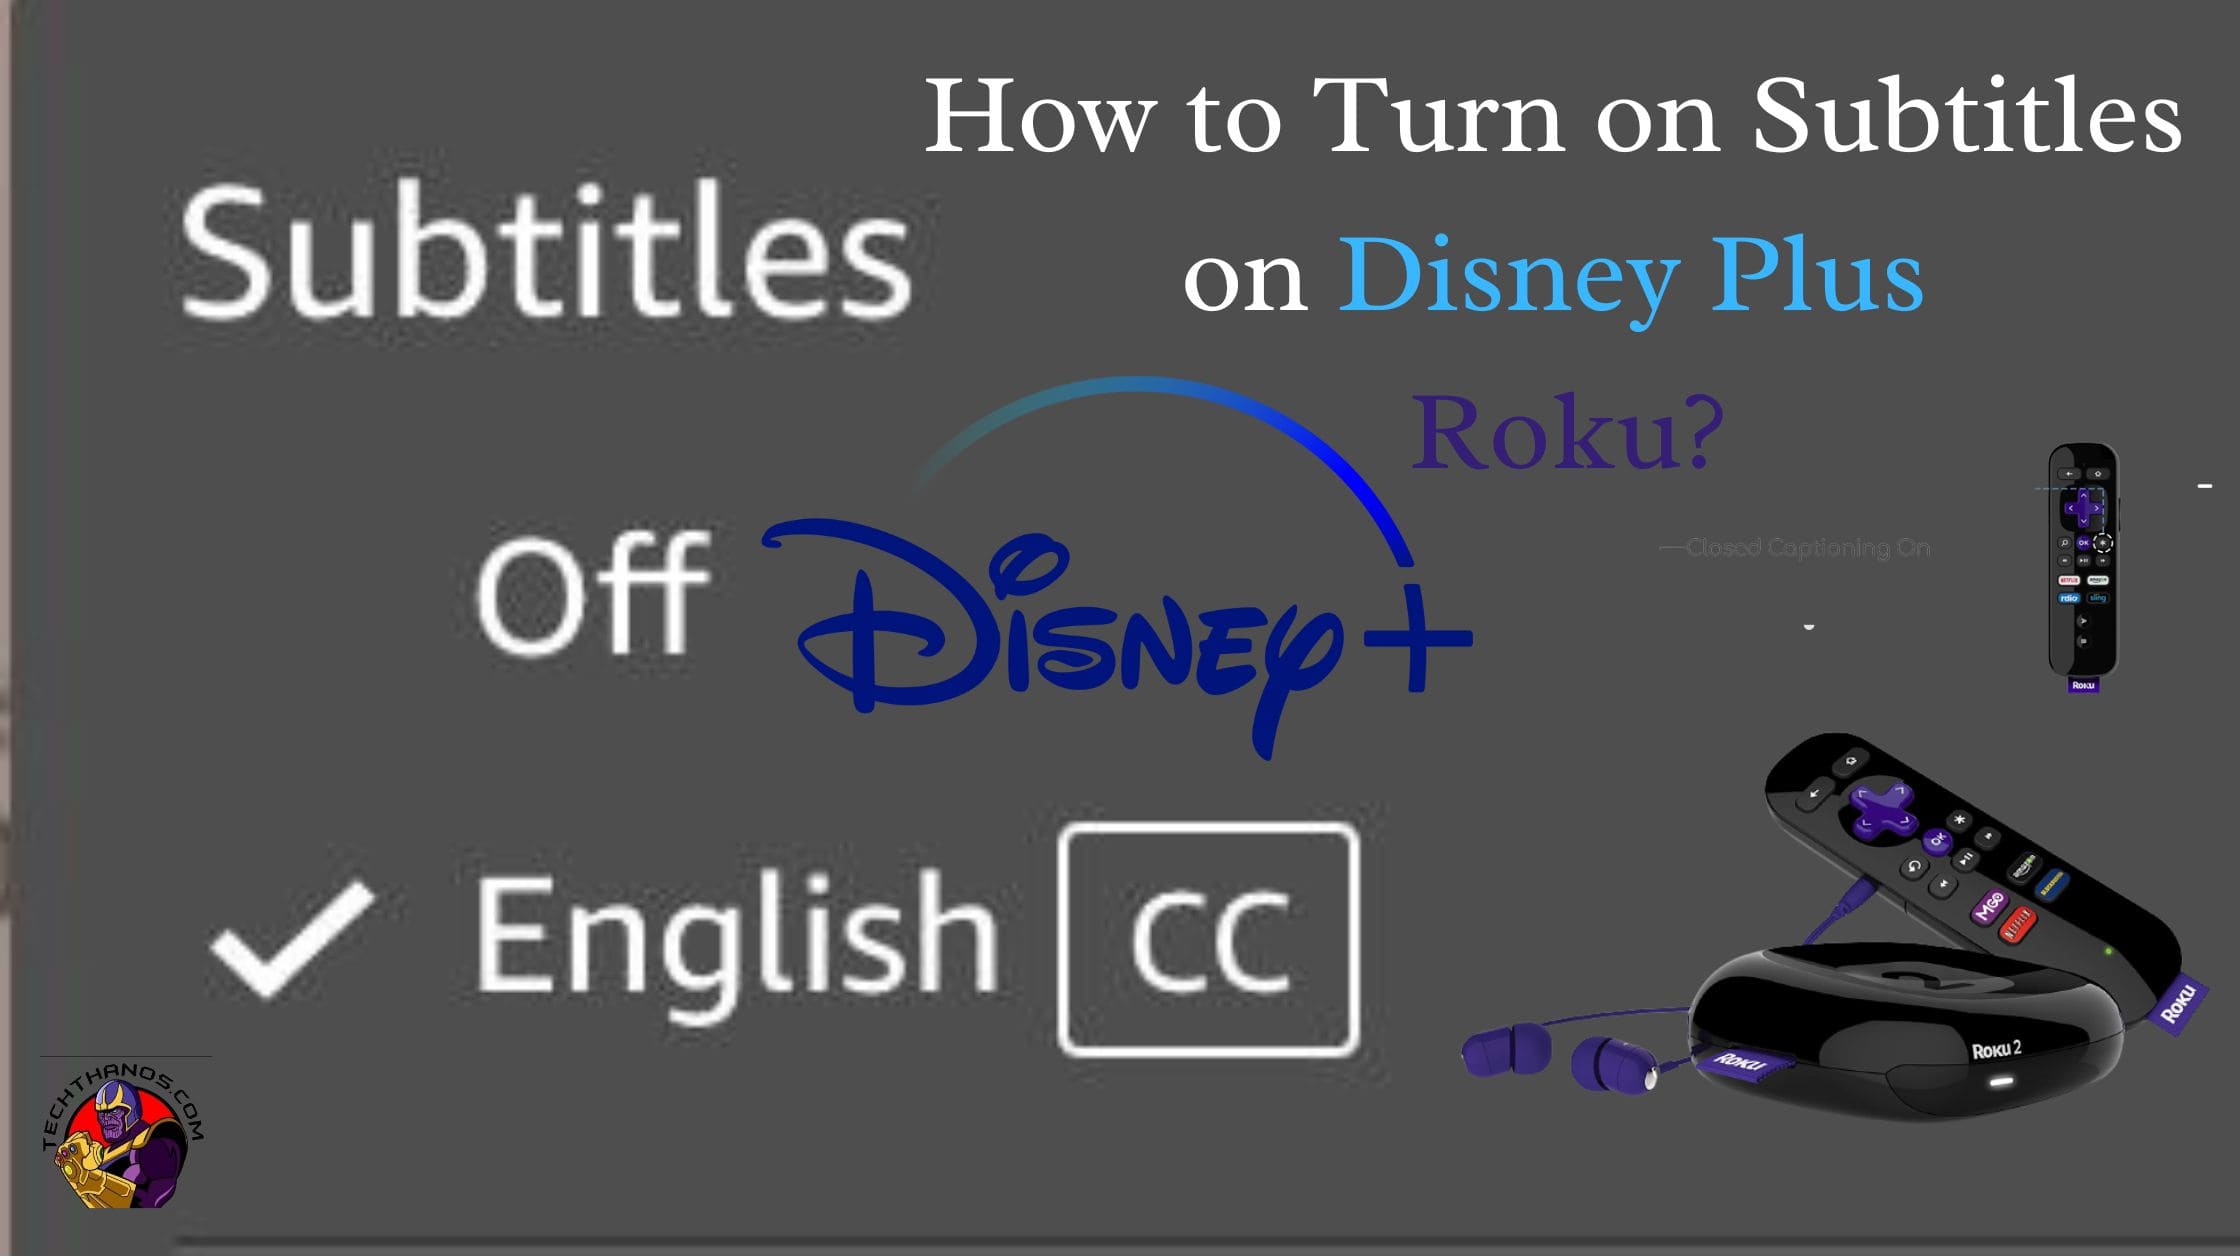 How to Turn on Subtitles on Disney Plus Roku